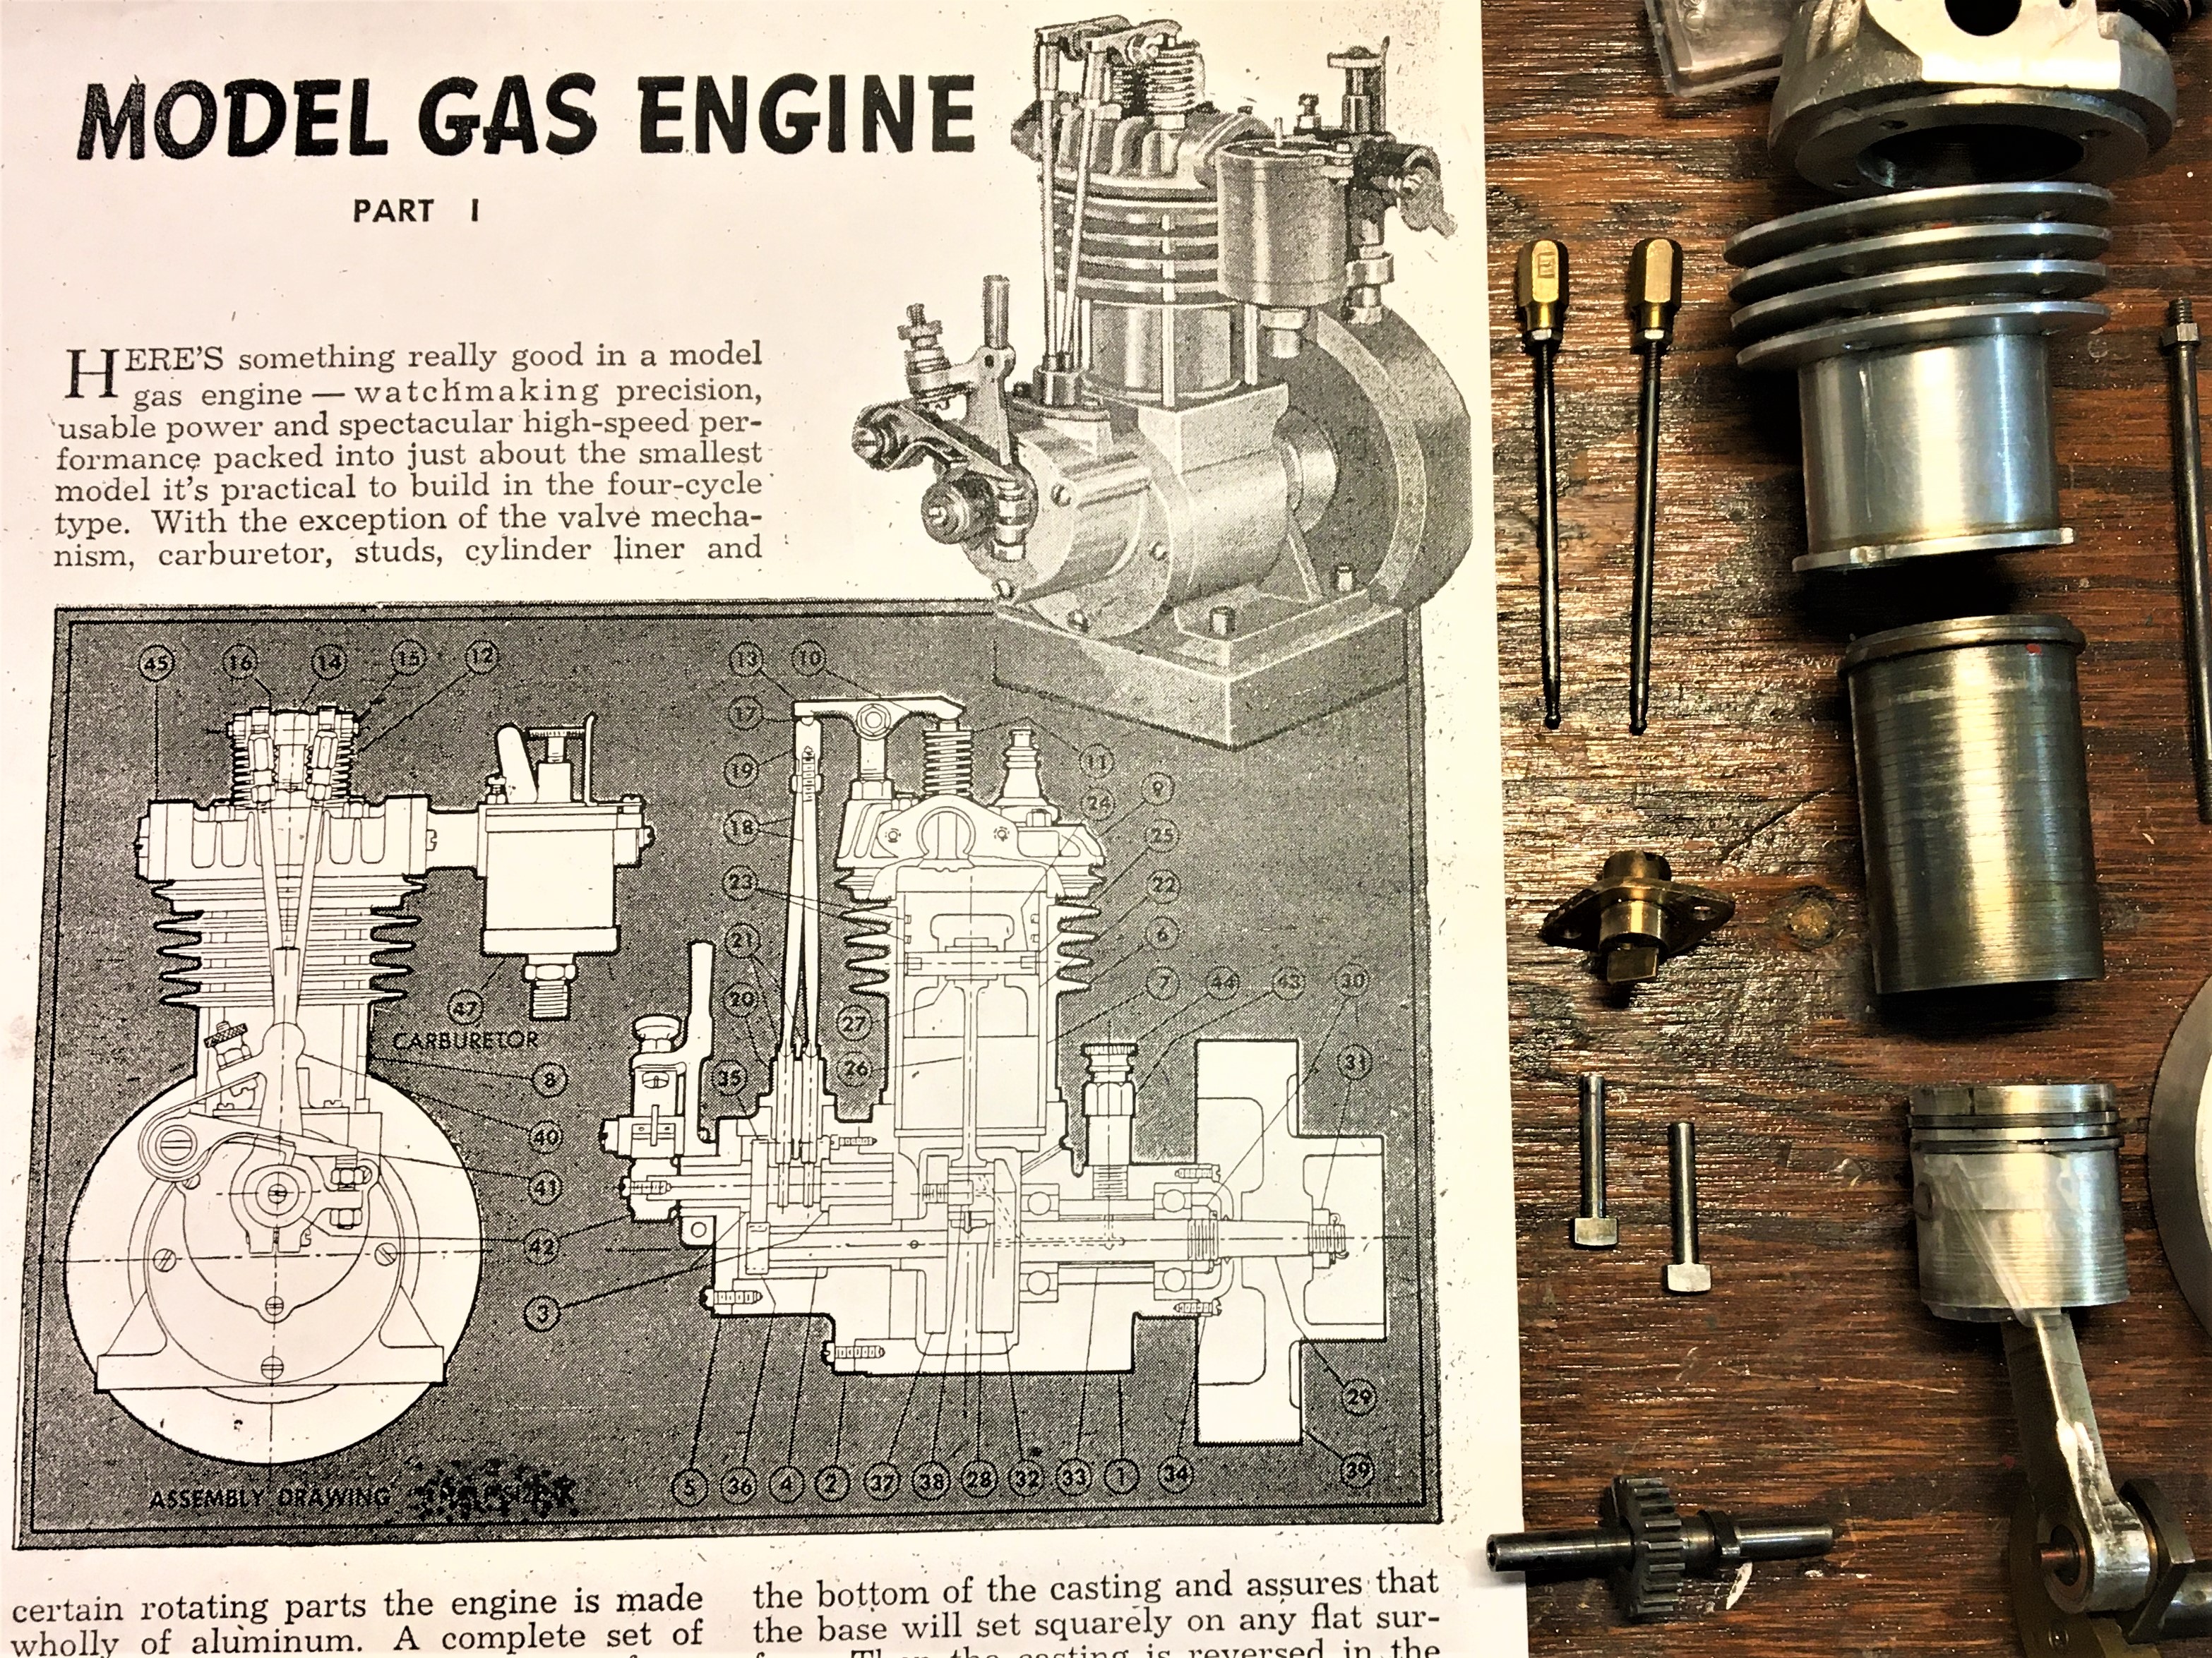 Original article for the 10cc four stroke engine